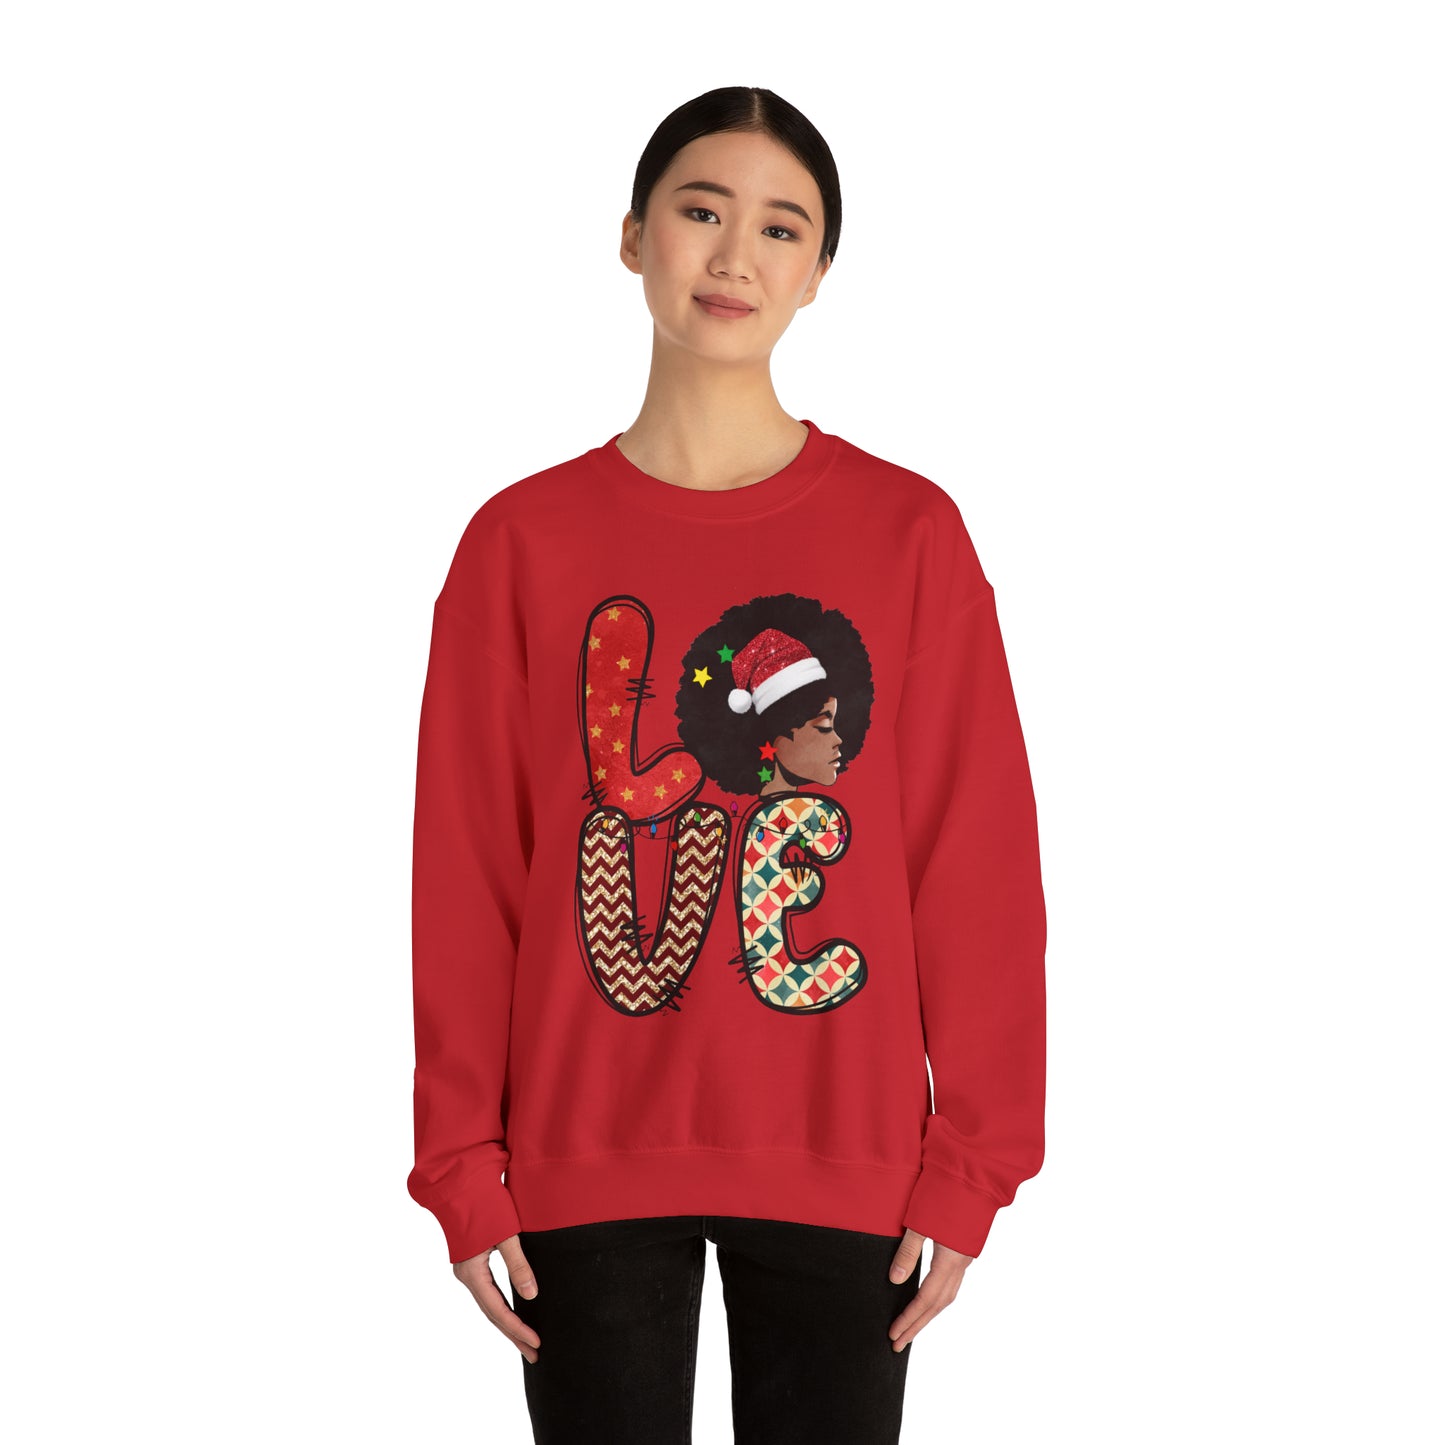 African American Girl Christmas Crewneck Sweatshirt - This Girl Loves Christmas -Cute Christmas Sweater